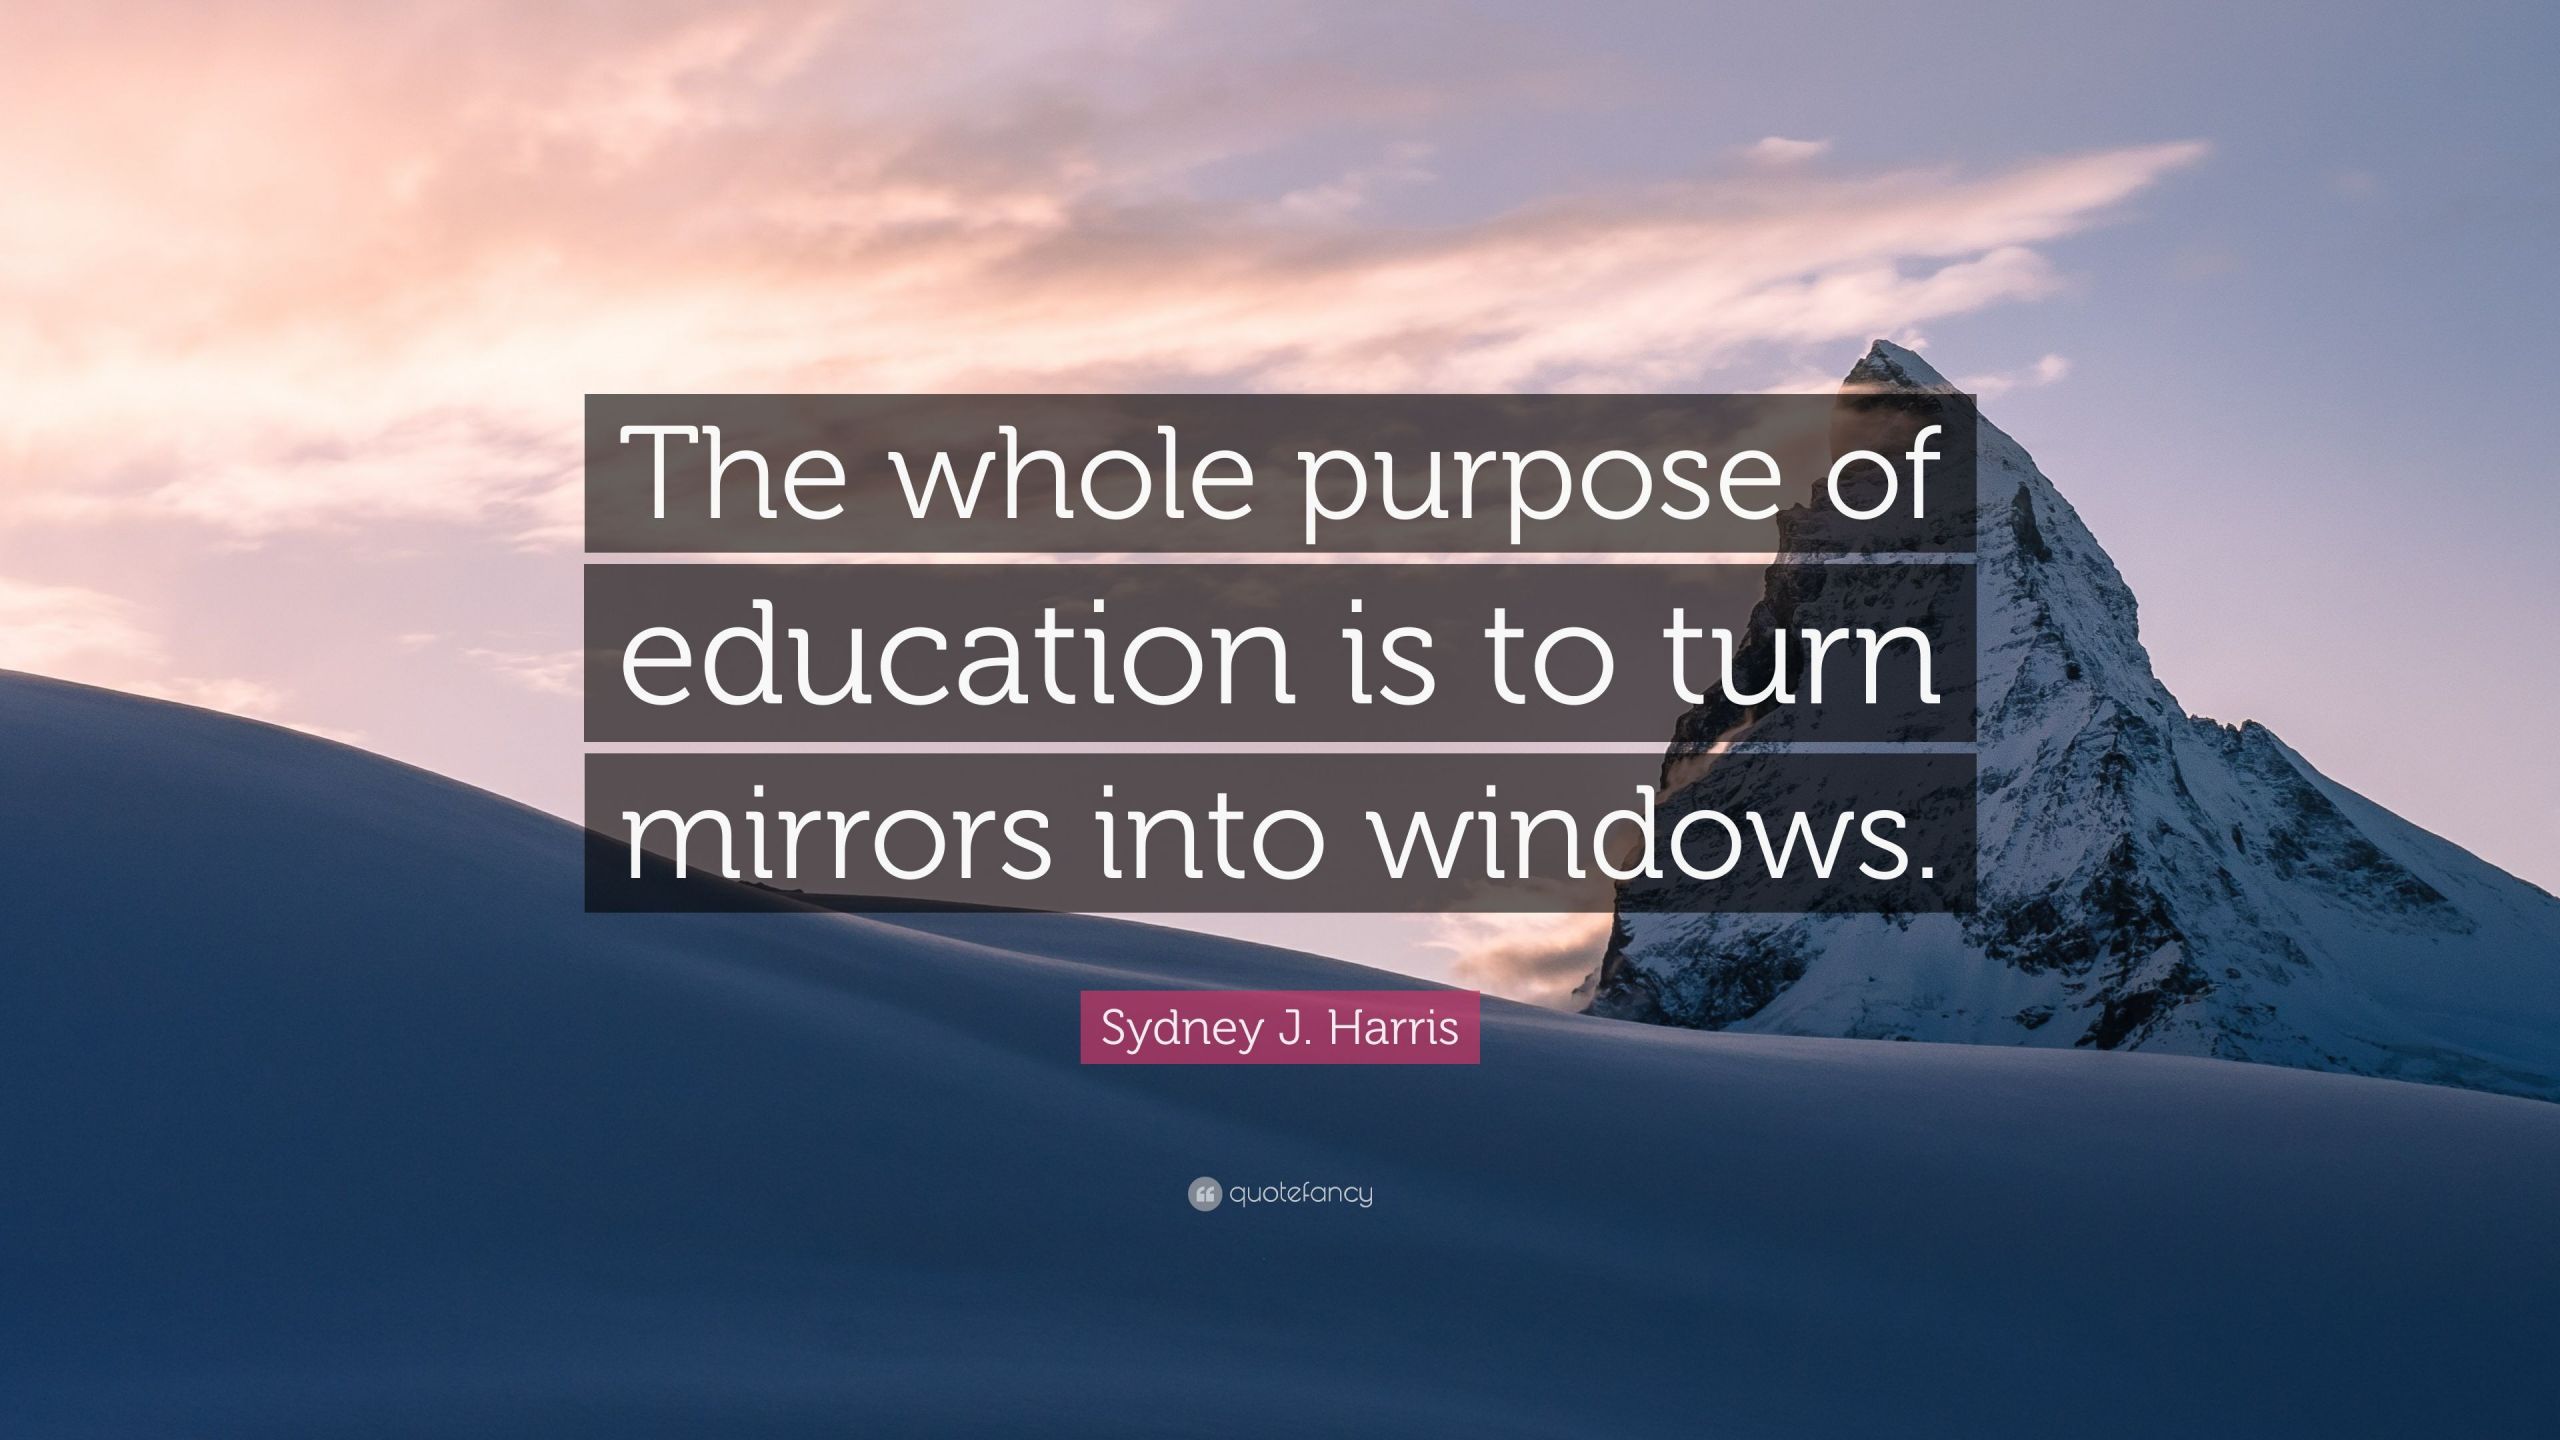 Purpose Of Education Quotes
 Sydney J Harris Quote “The whole purpose of education is